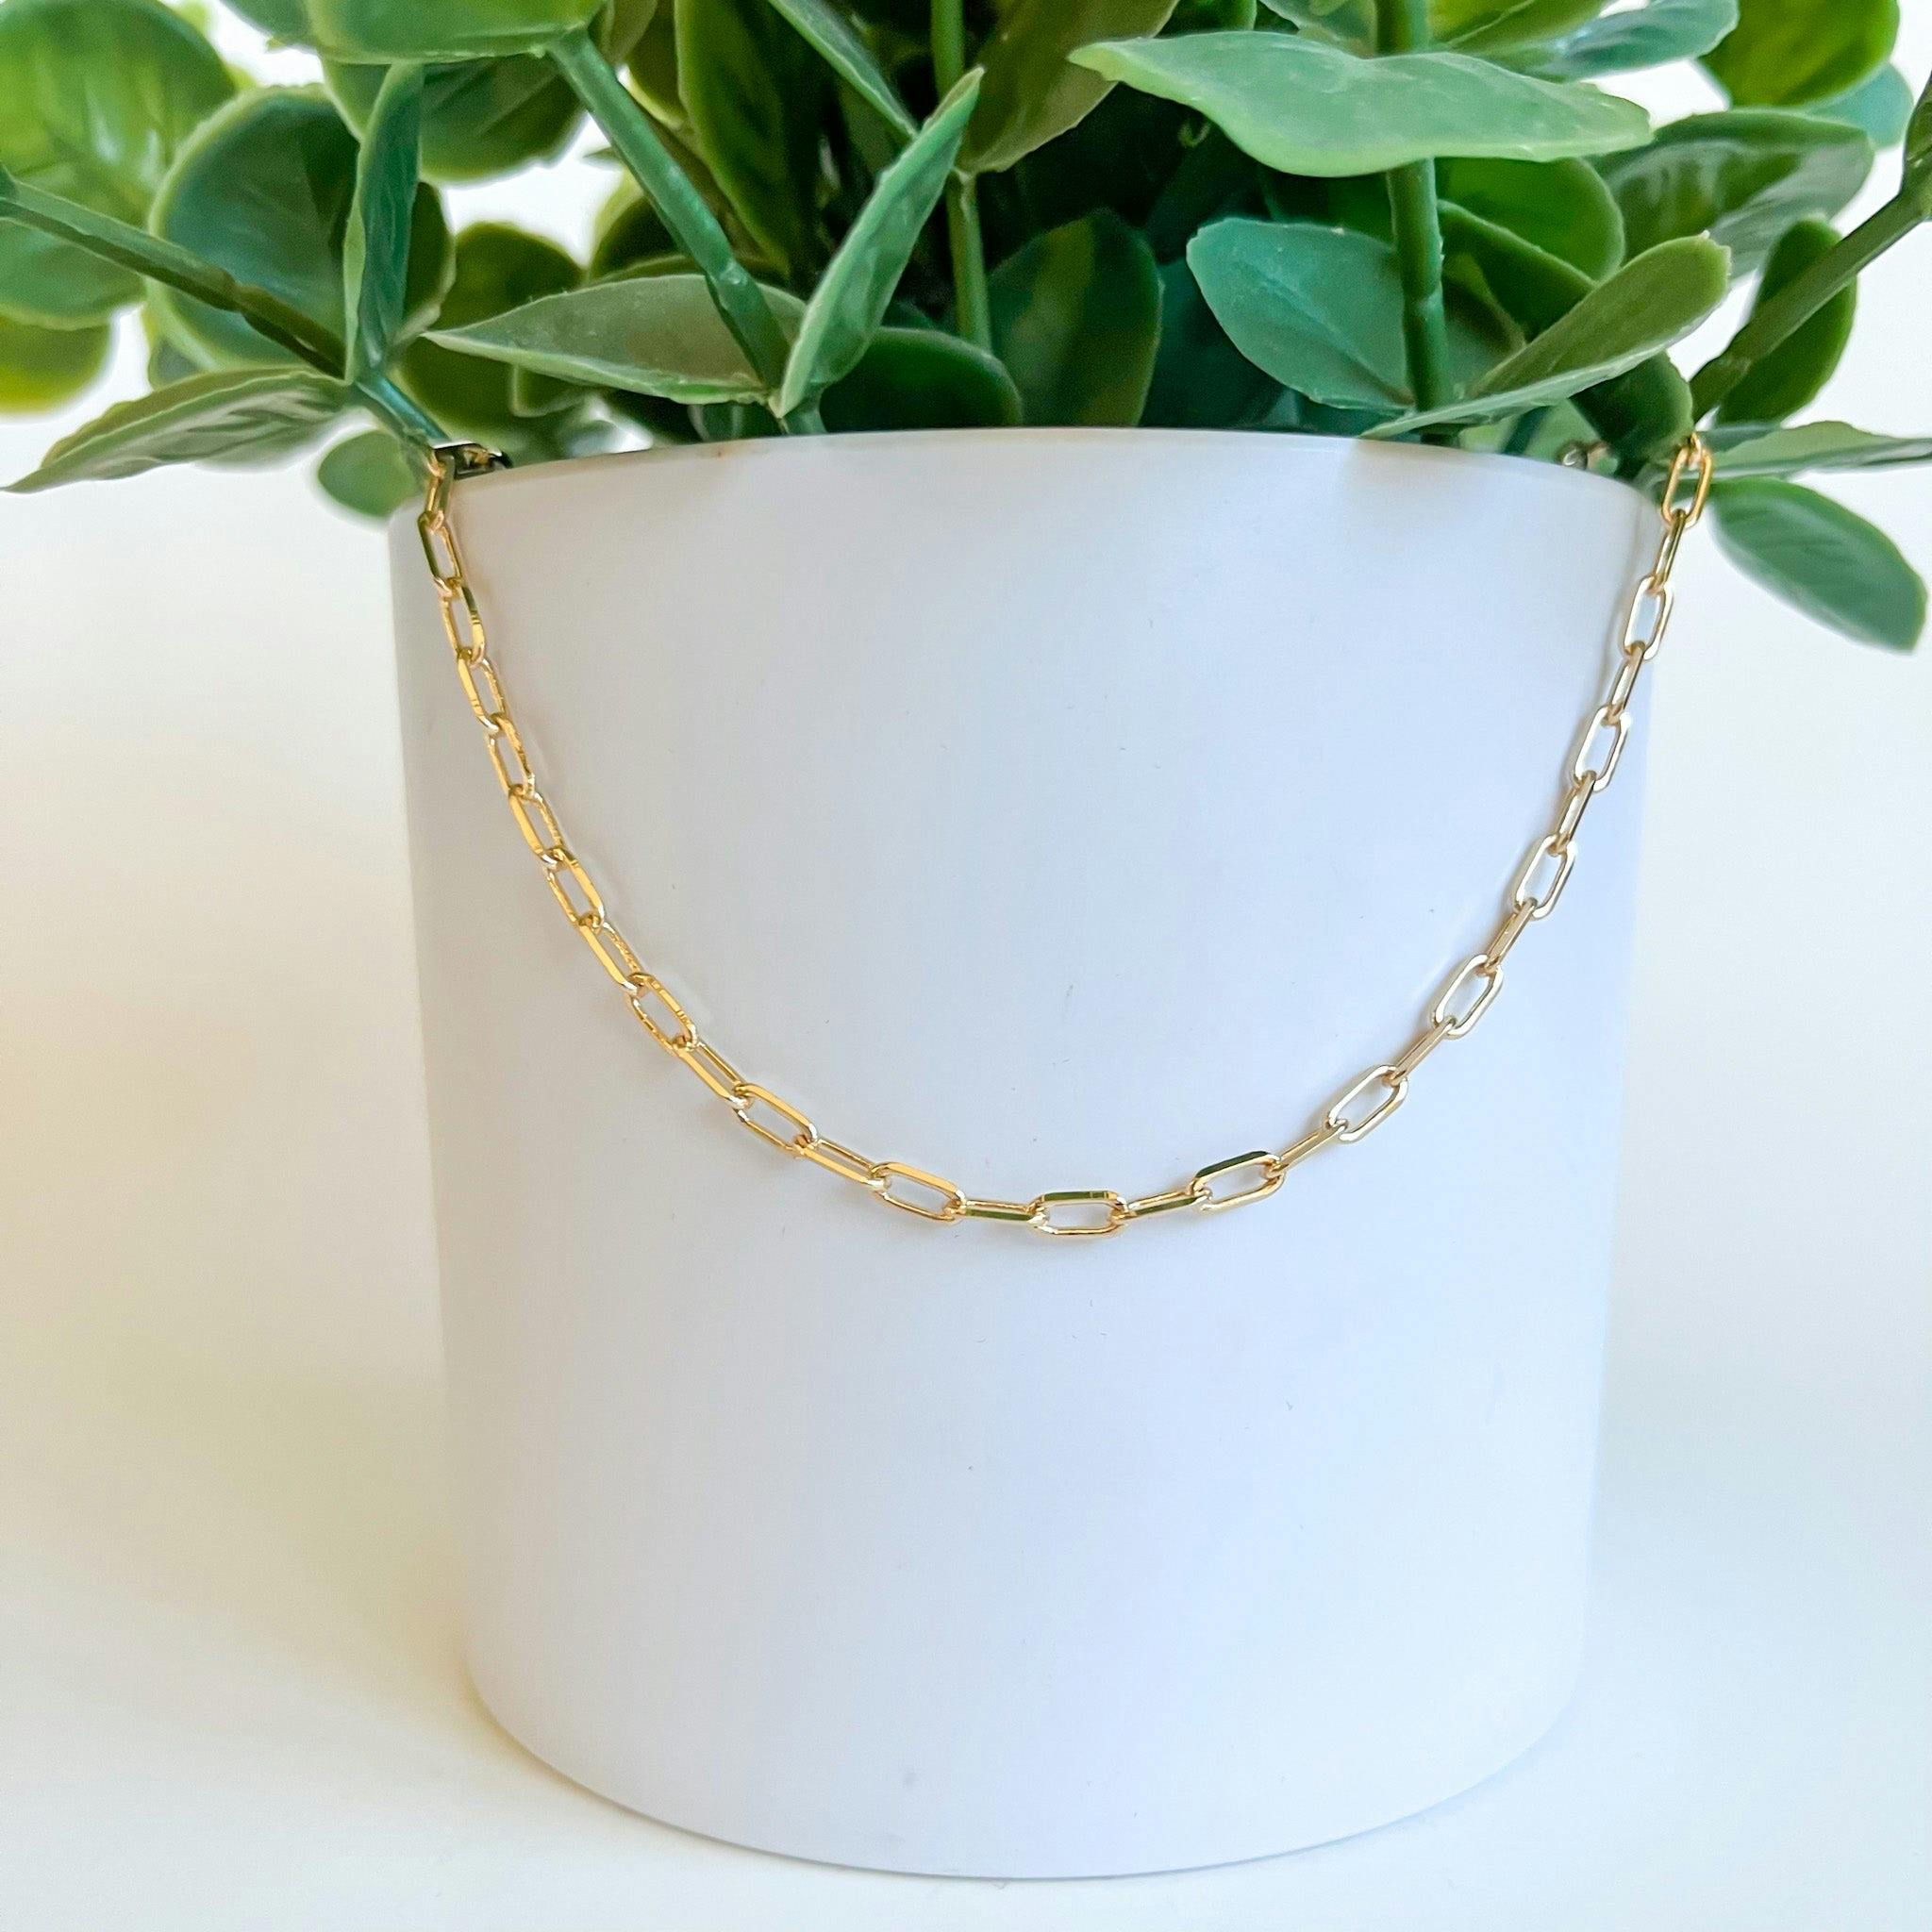 Mini Paper Clip Chain Necklace - Gold Filled